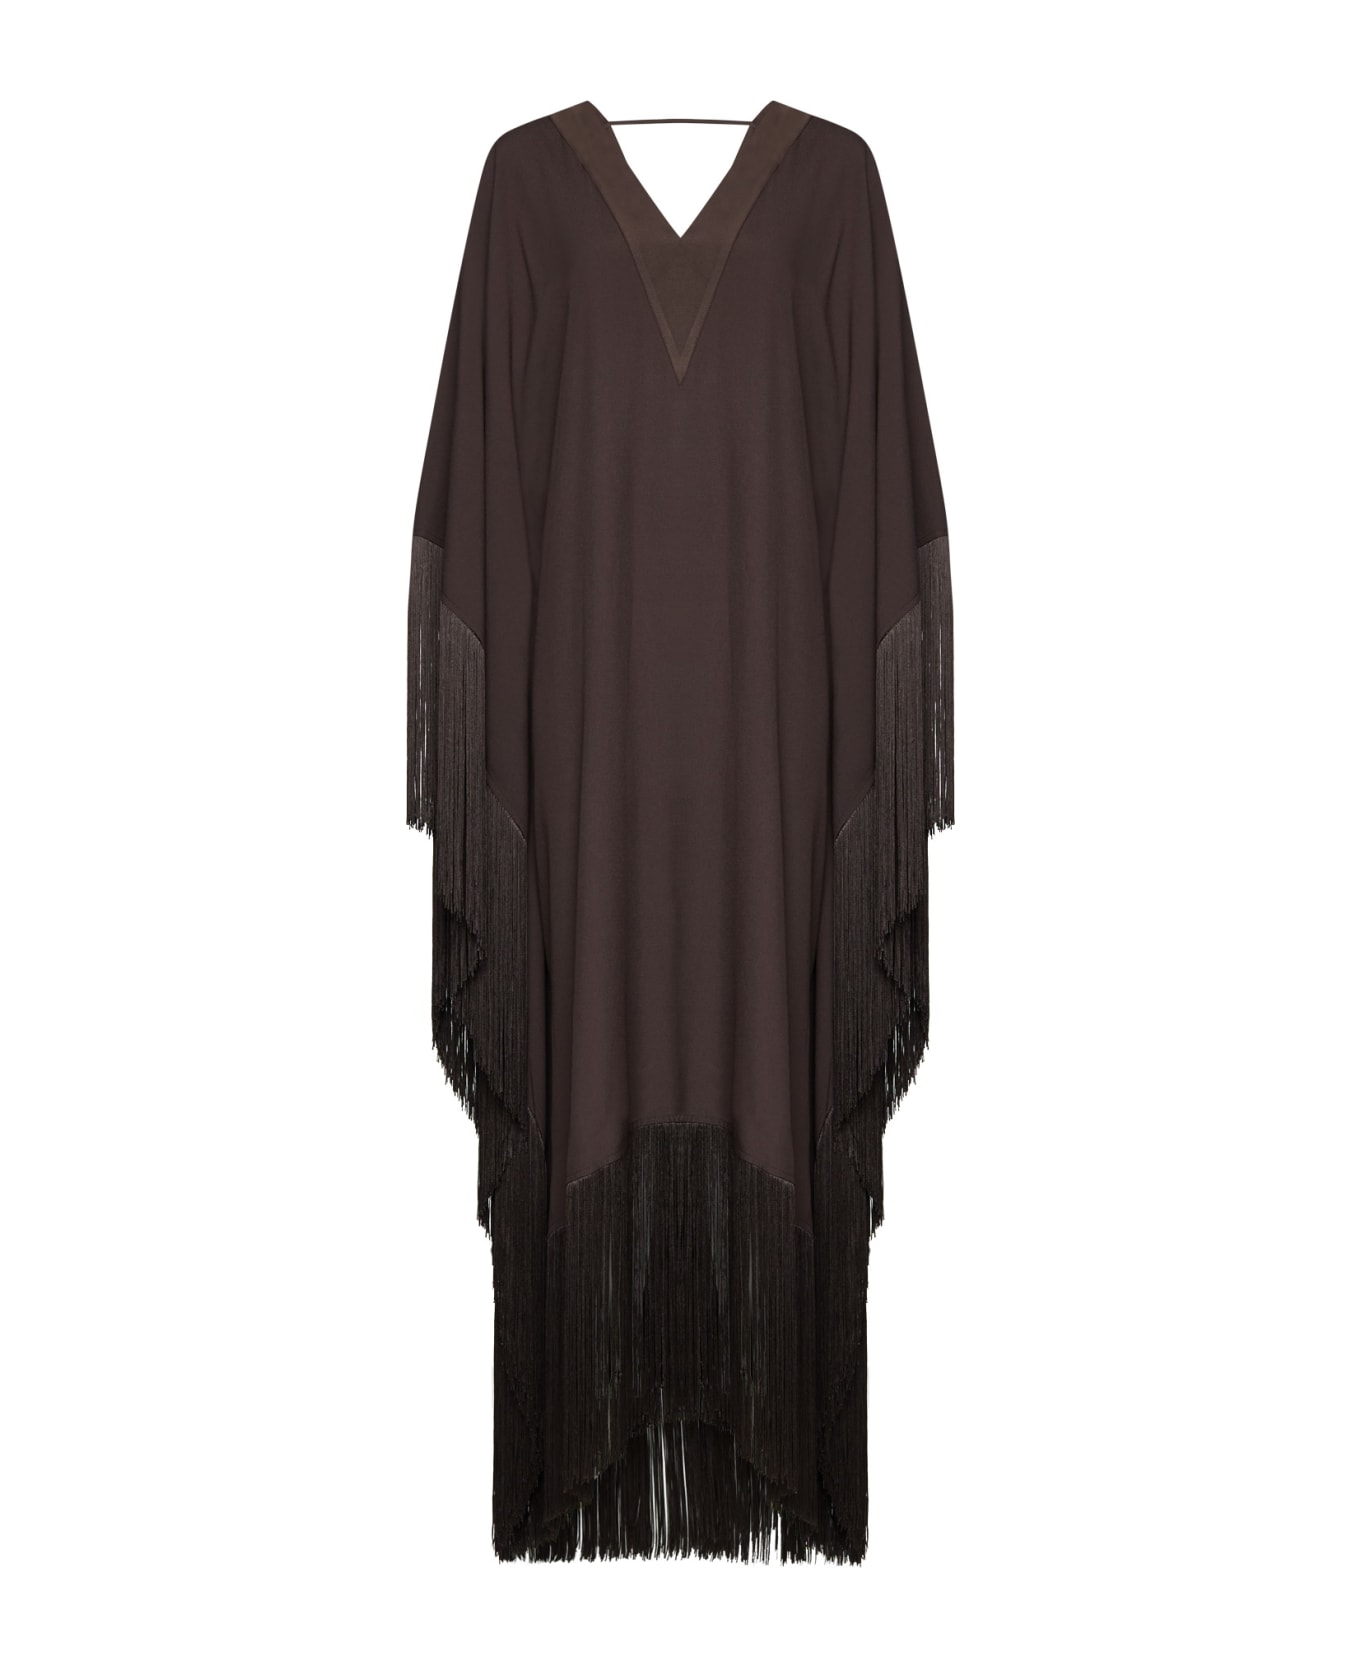 Taller Marmo Dress - Brown